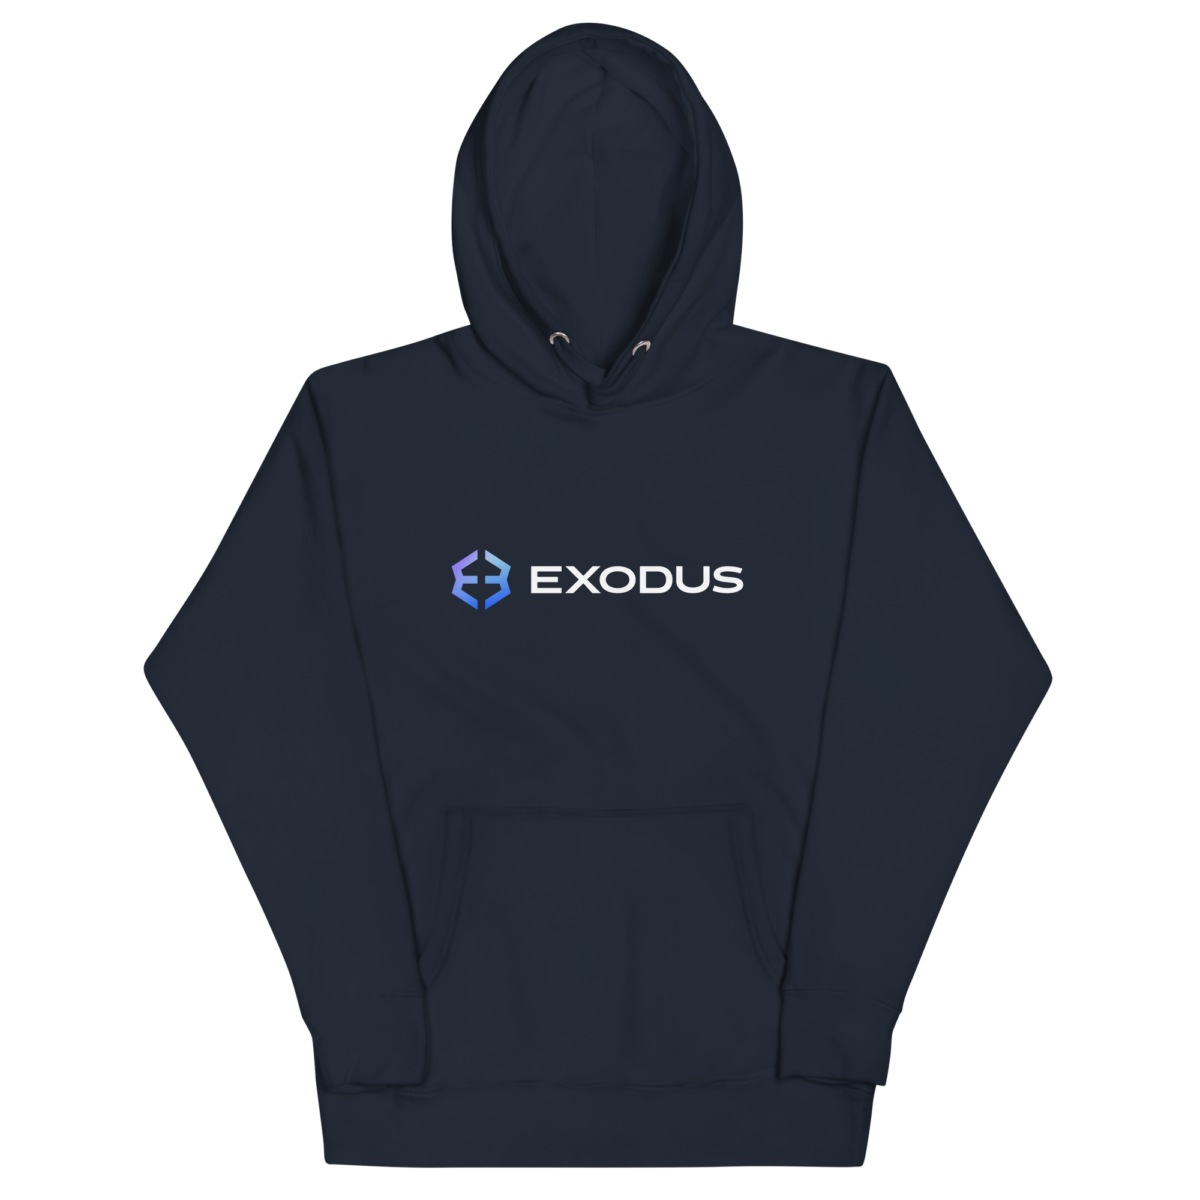 unisex premium hoodie navy blazer front 63172d2d8c131 - Exodus Hoodie